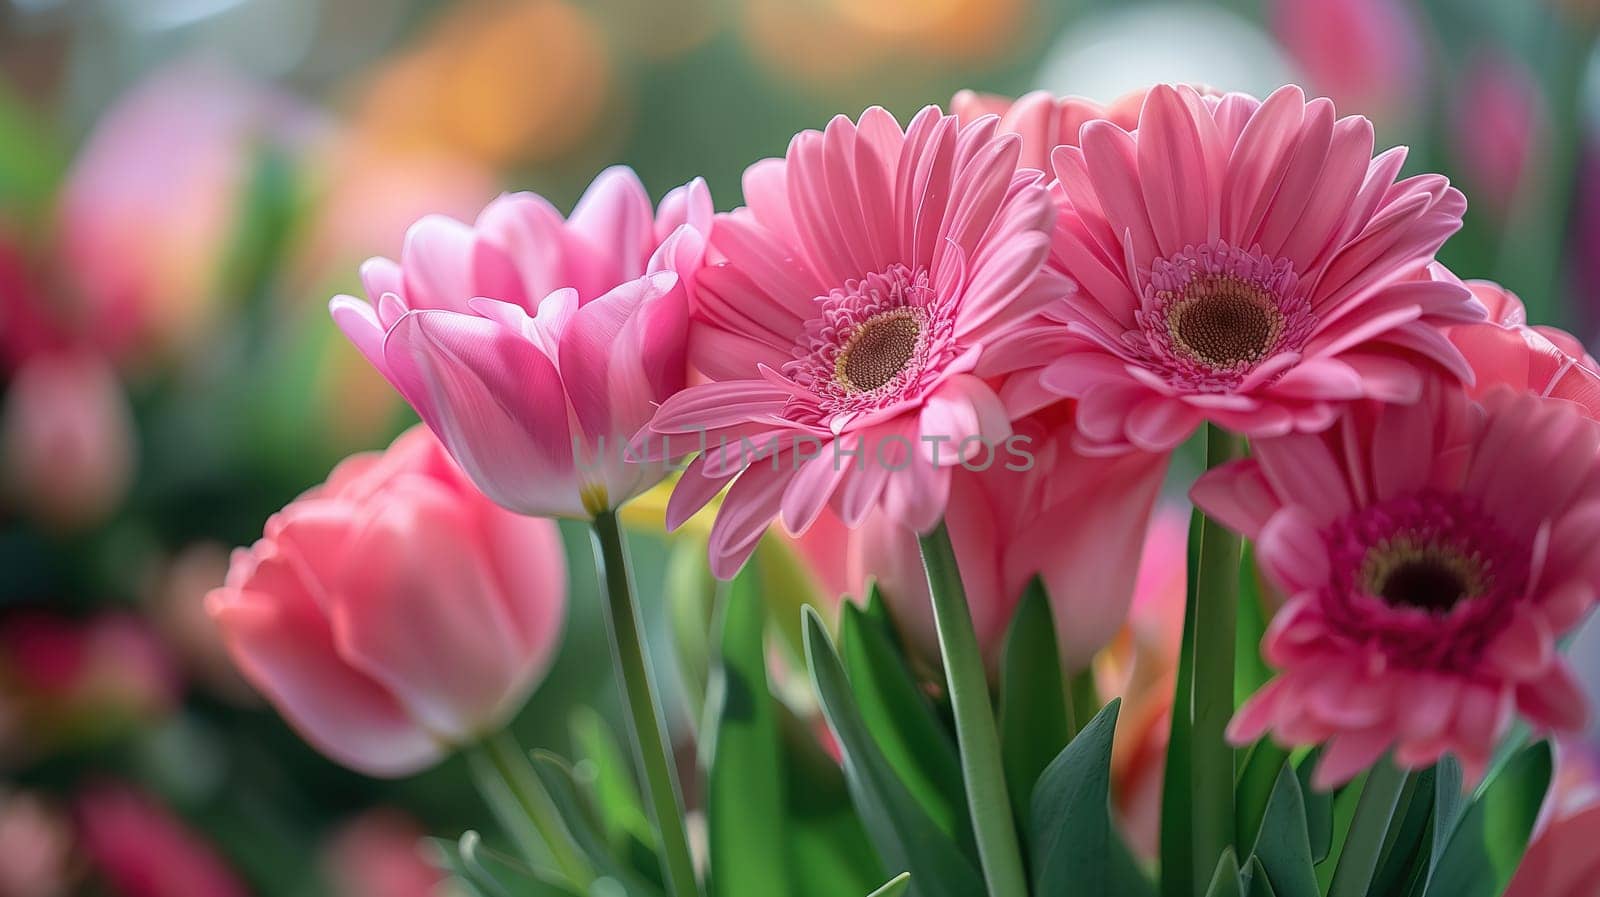 Pink Flowers in Vase by TRMK